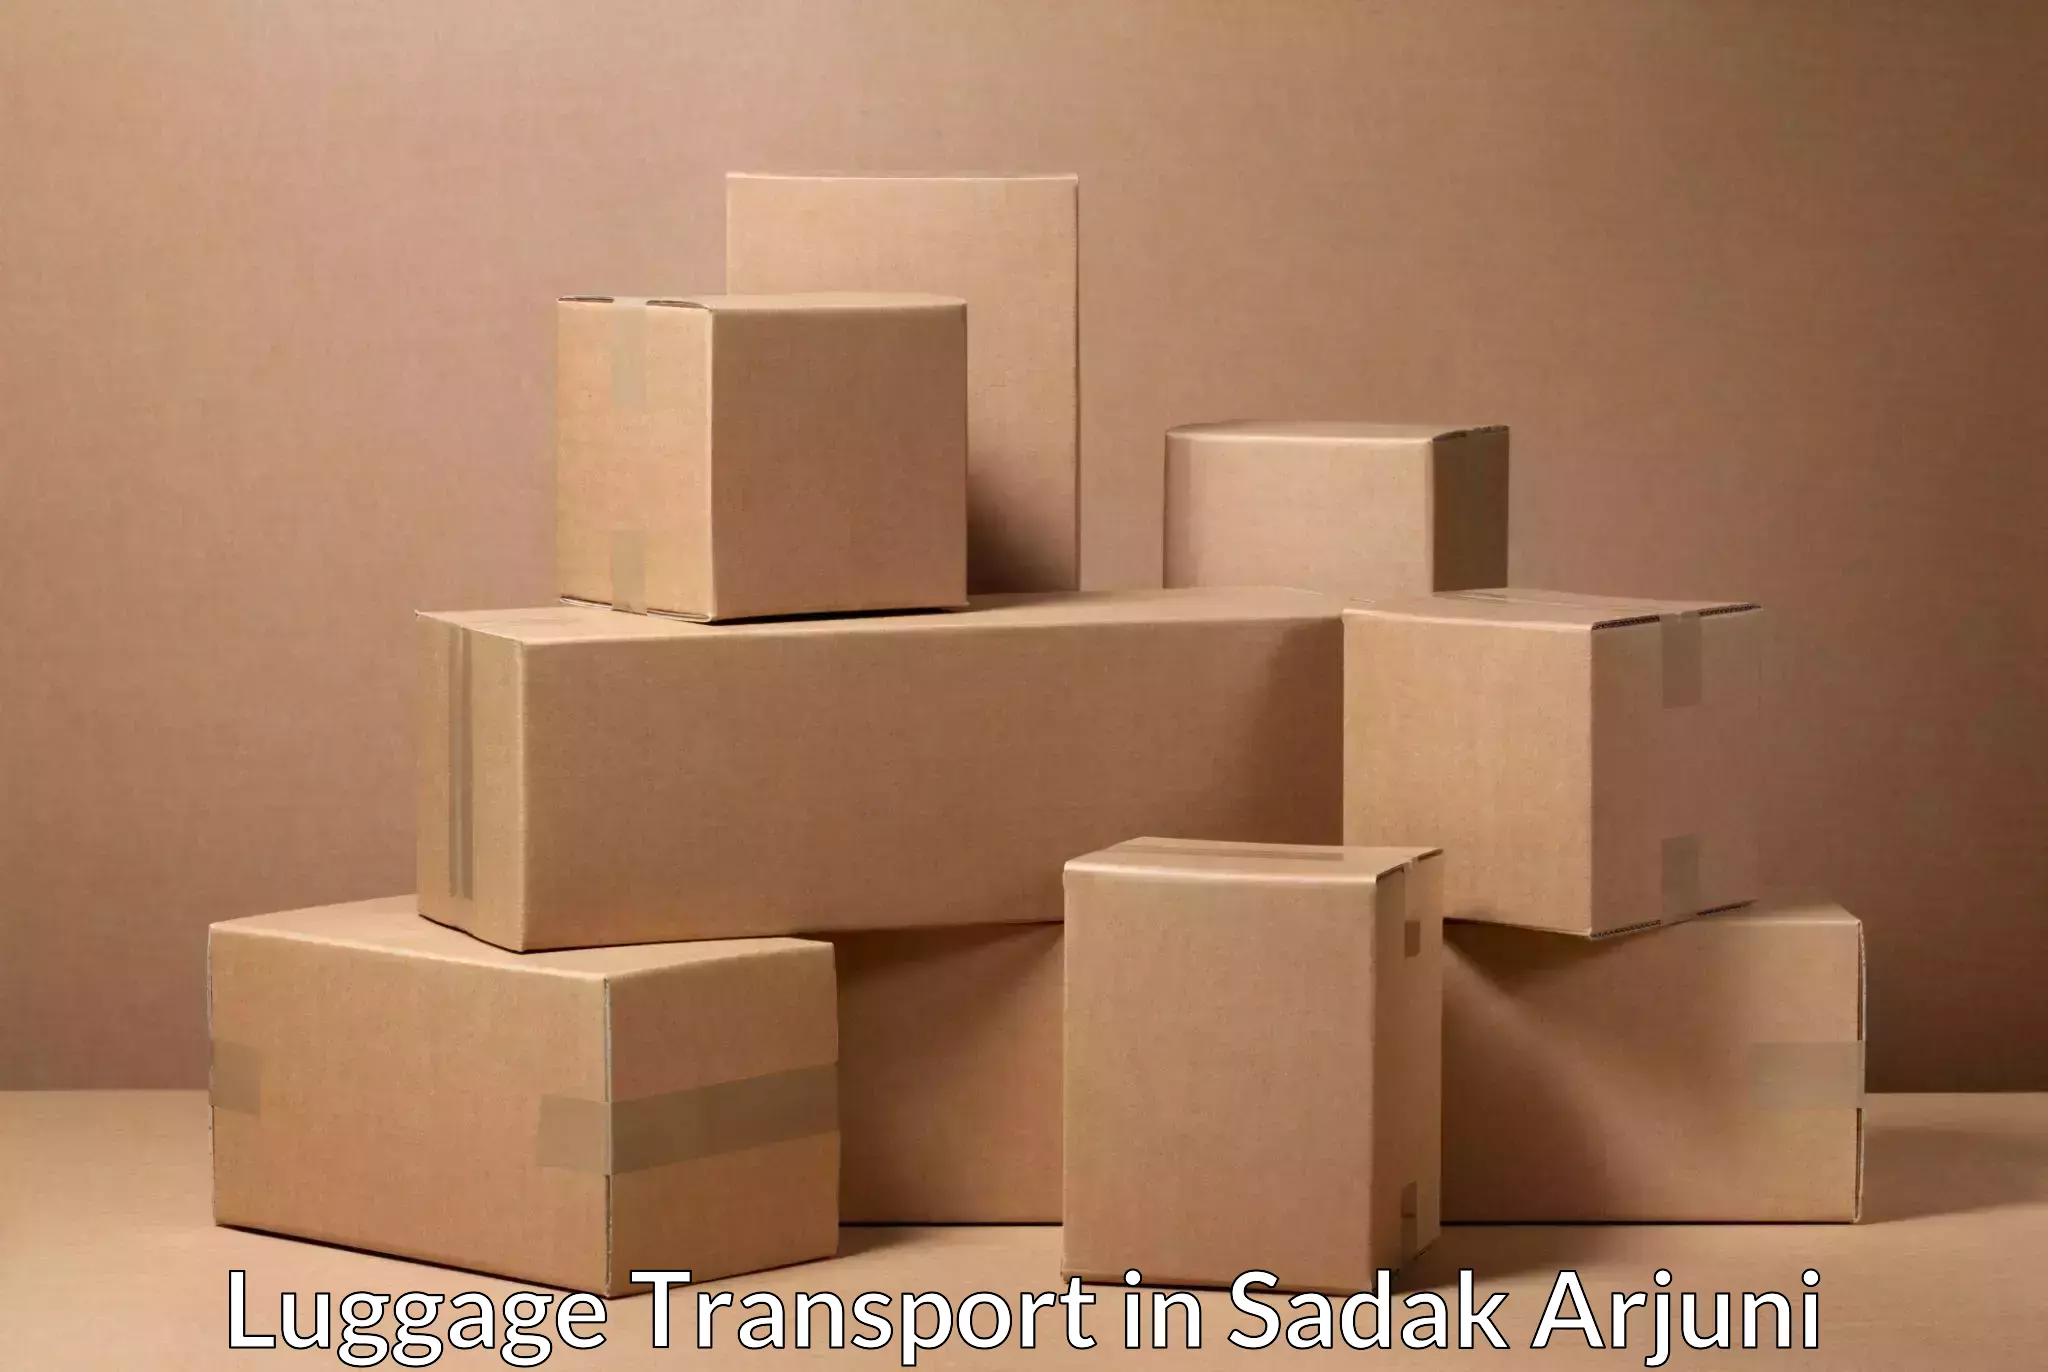 Luggage transport consulting in Sadak Arjuni